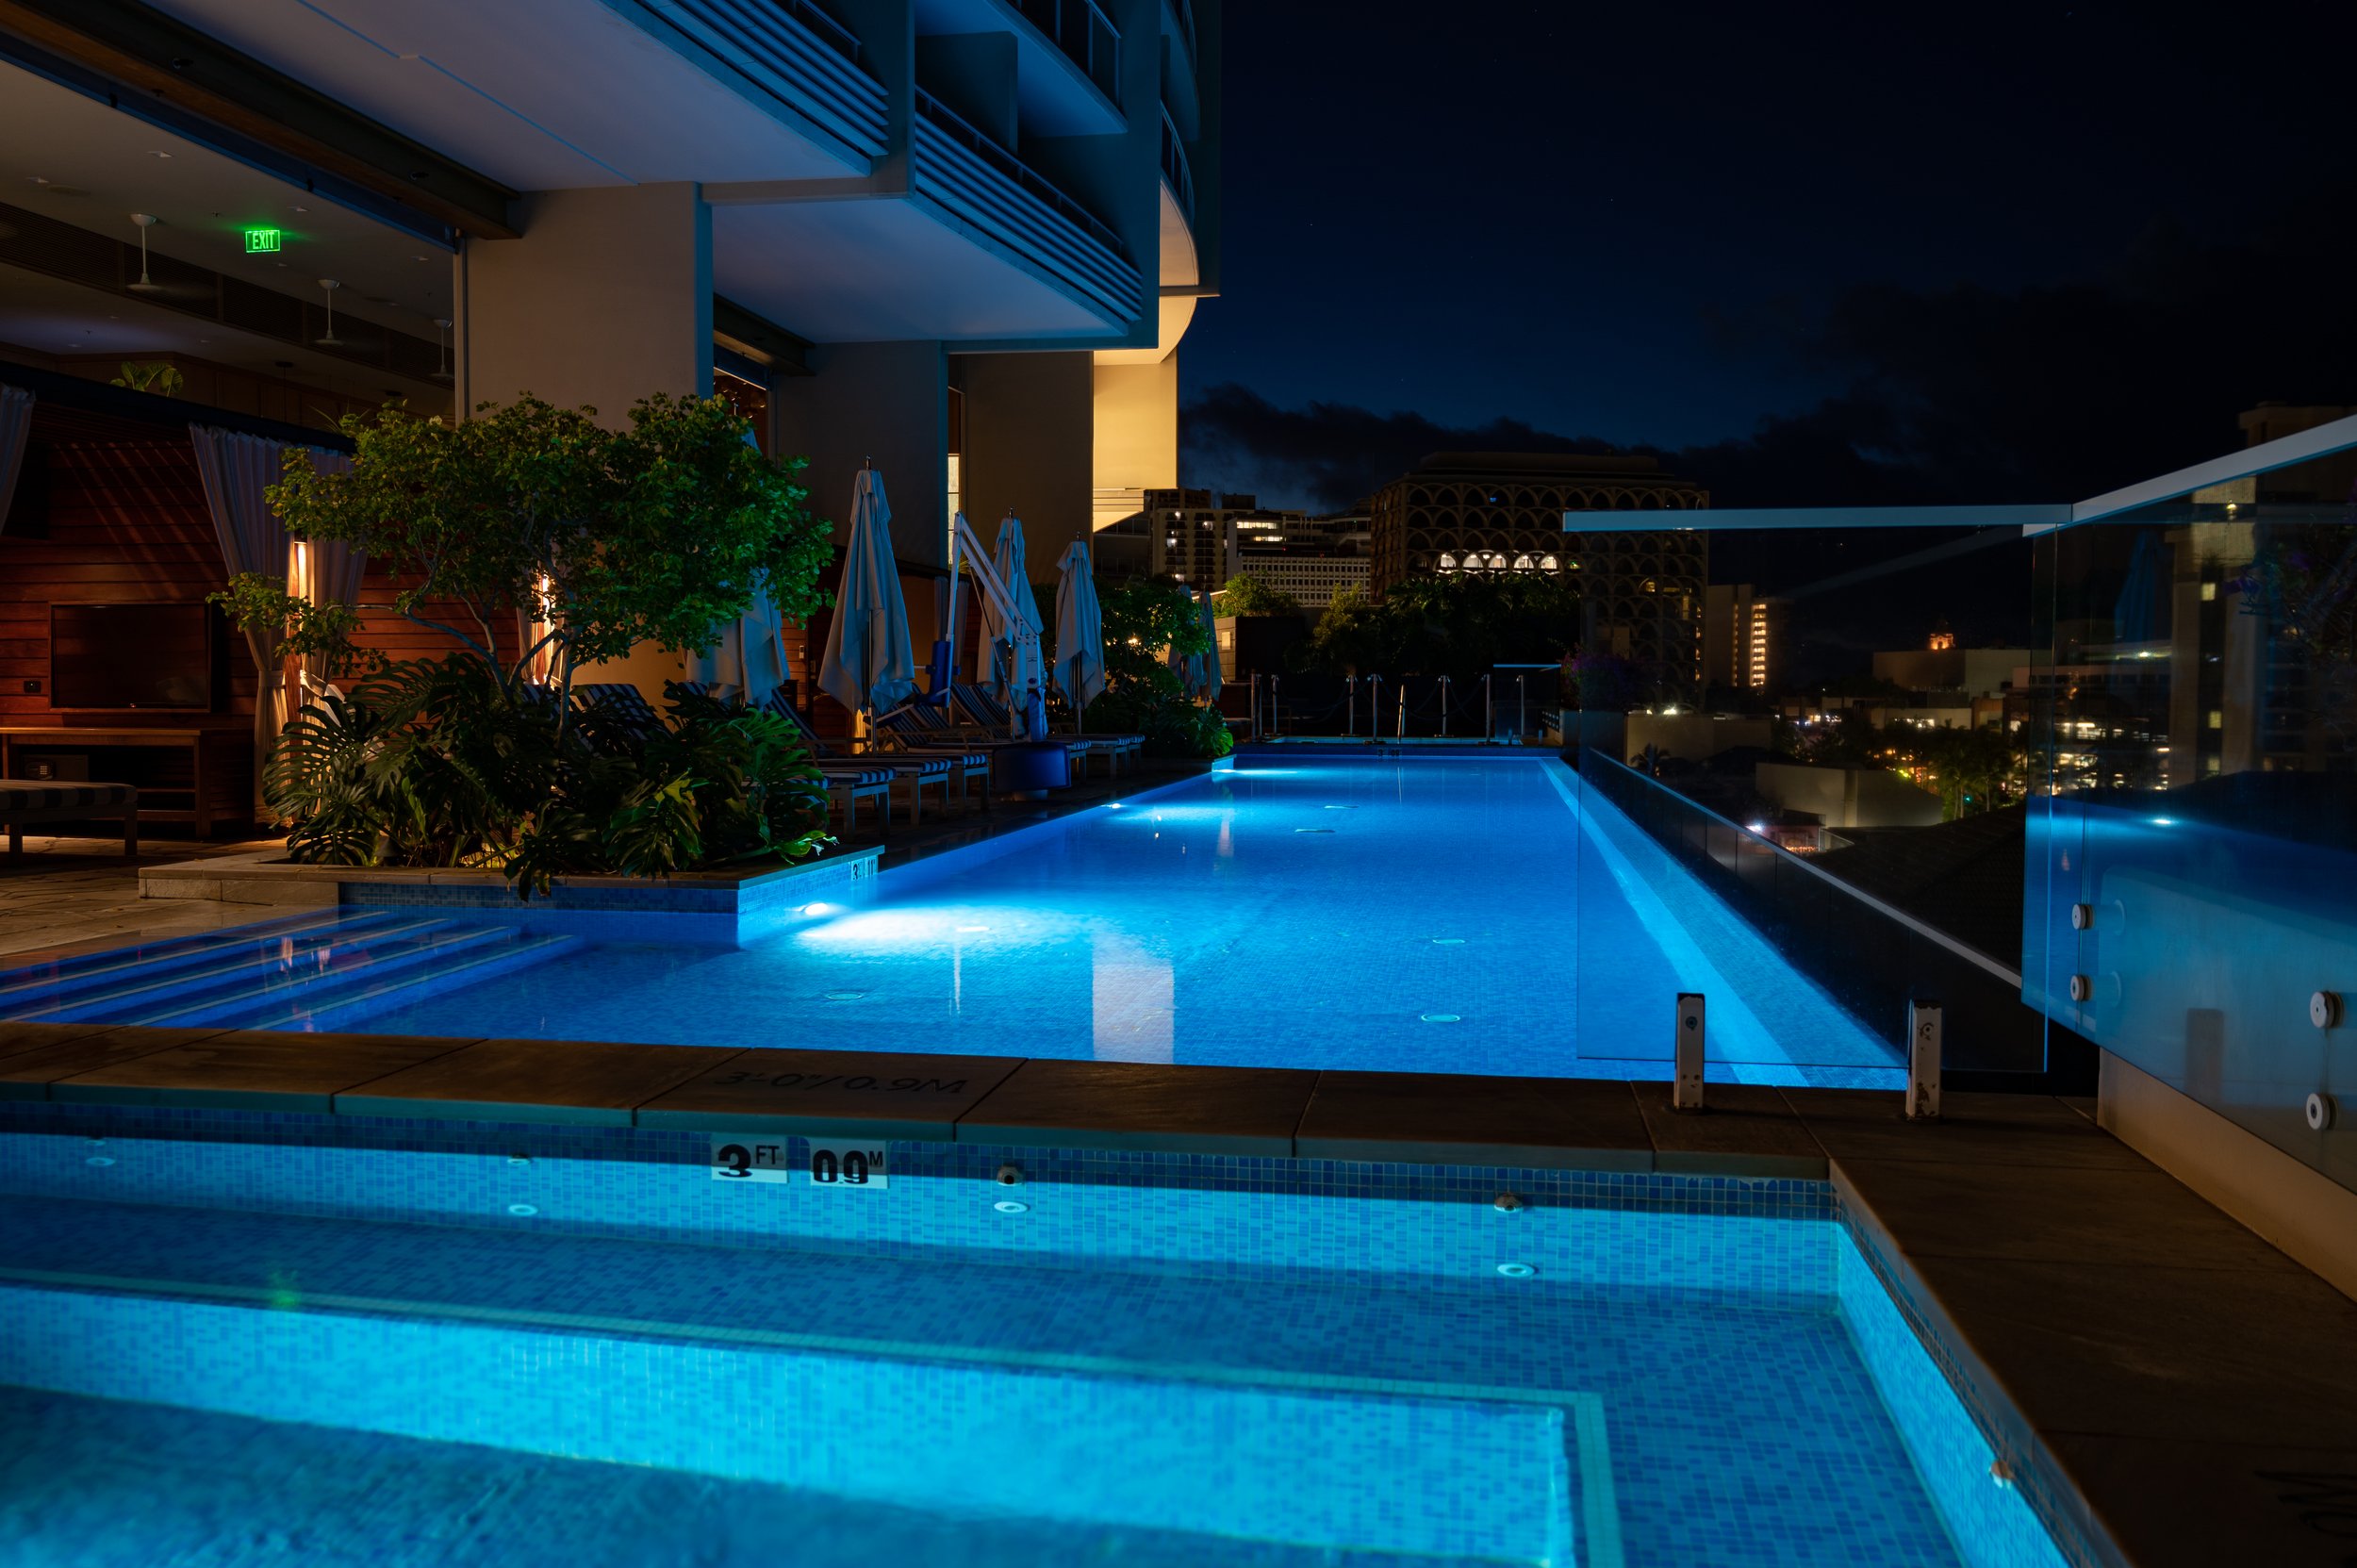 The Ritz-Carlton Waikiki Pool